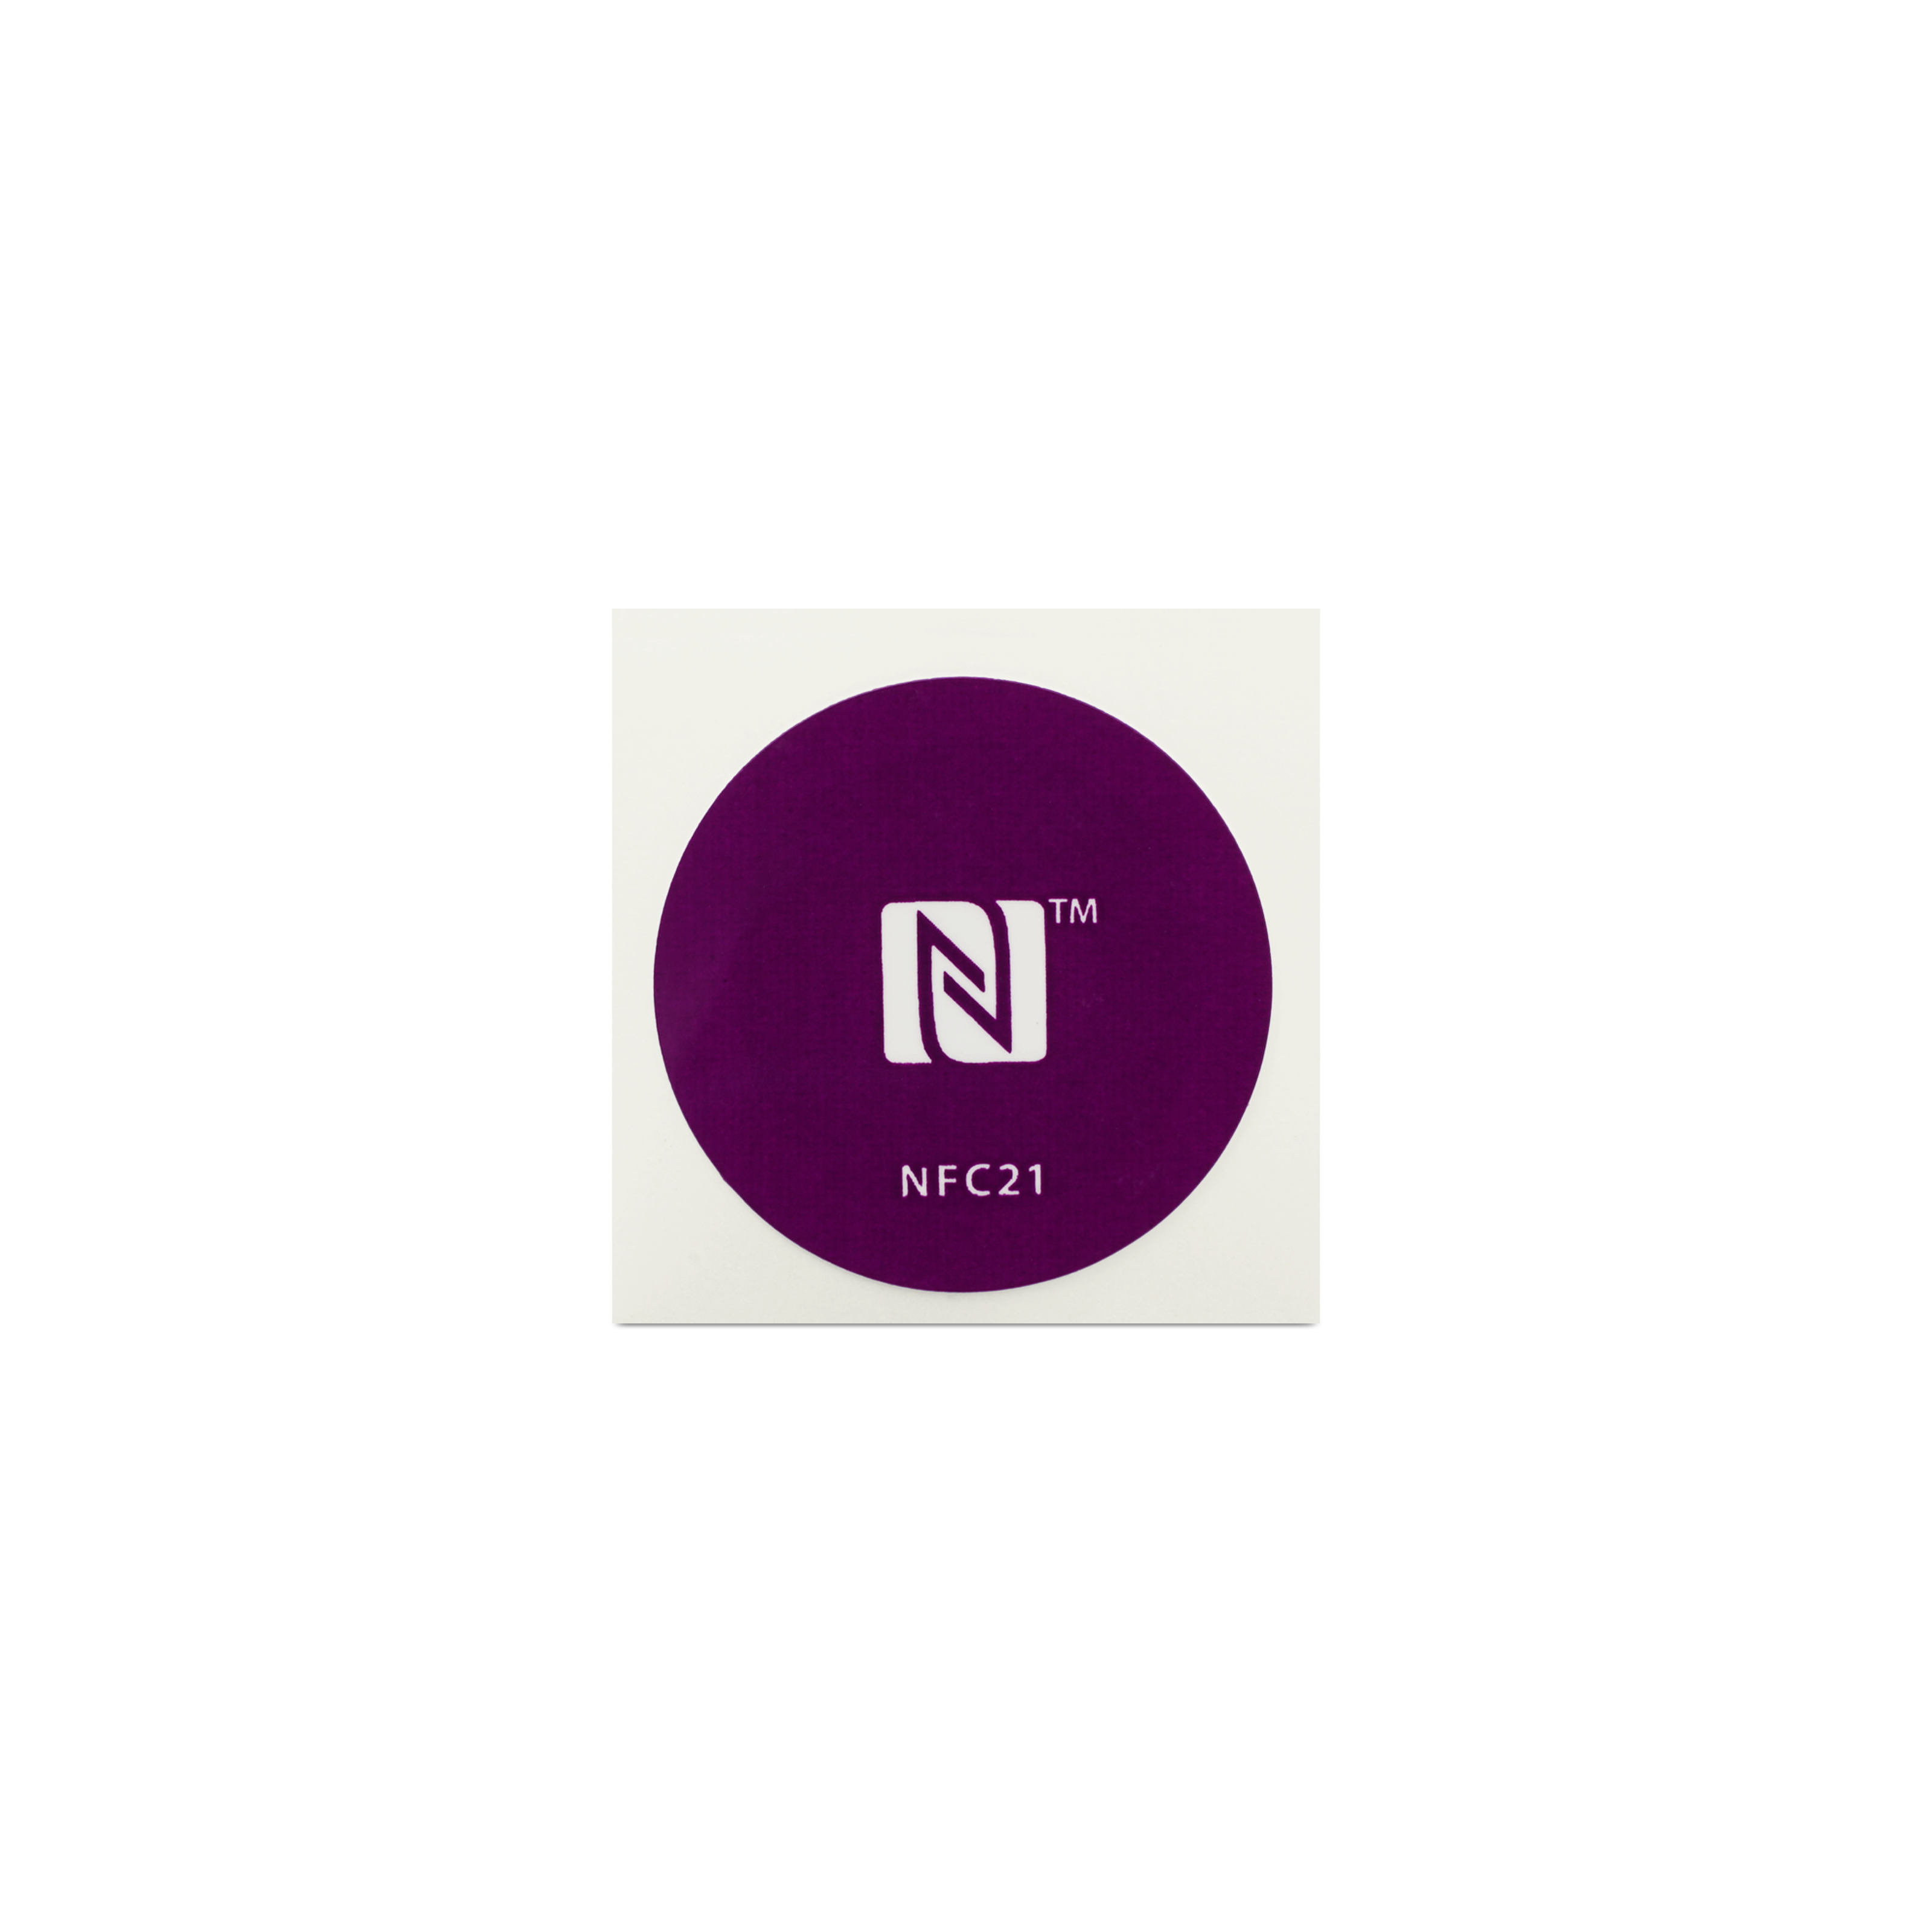 NFC Sticker PET - 30 mm - NTAG216 - 924 Byte - purple with logo